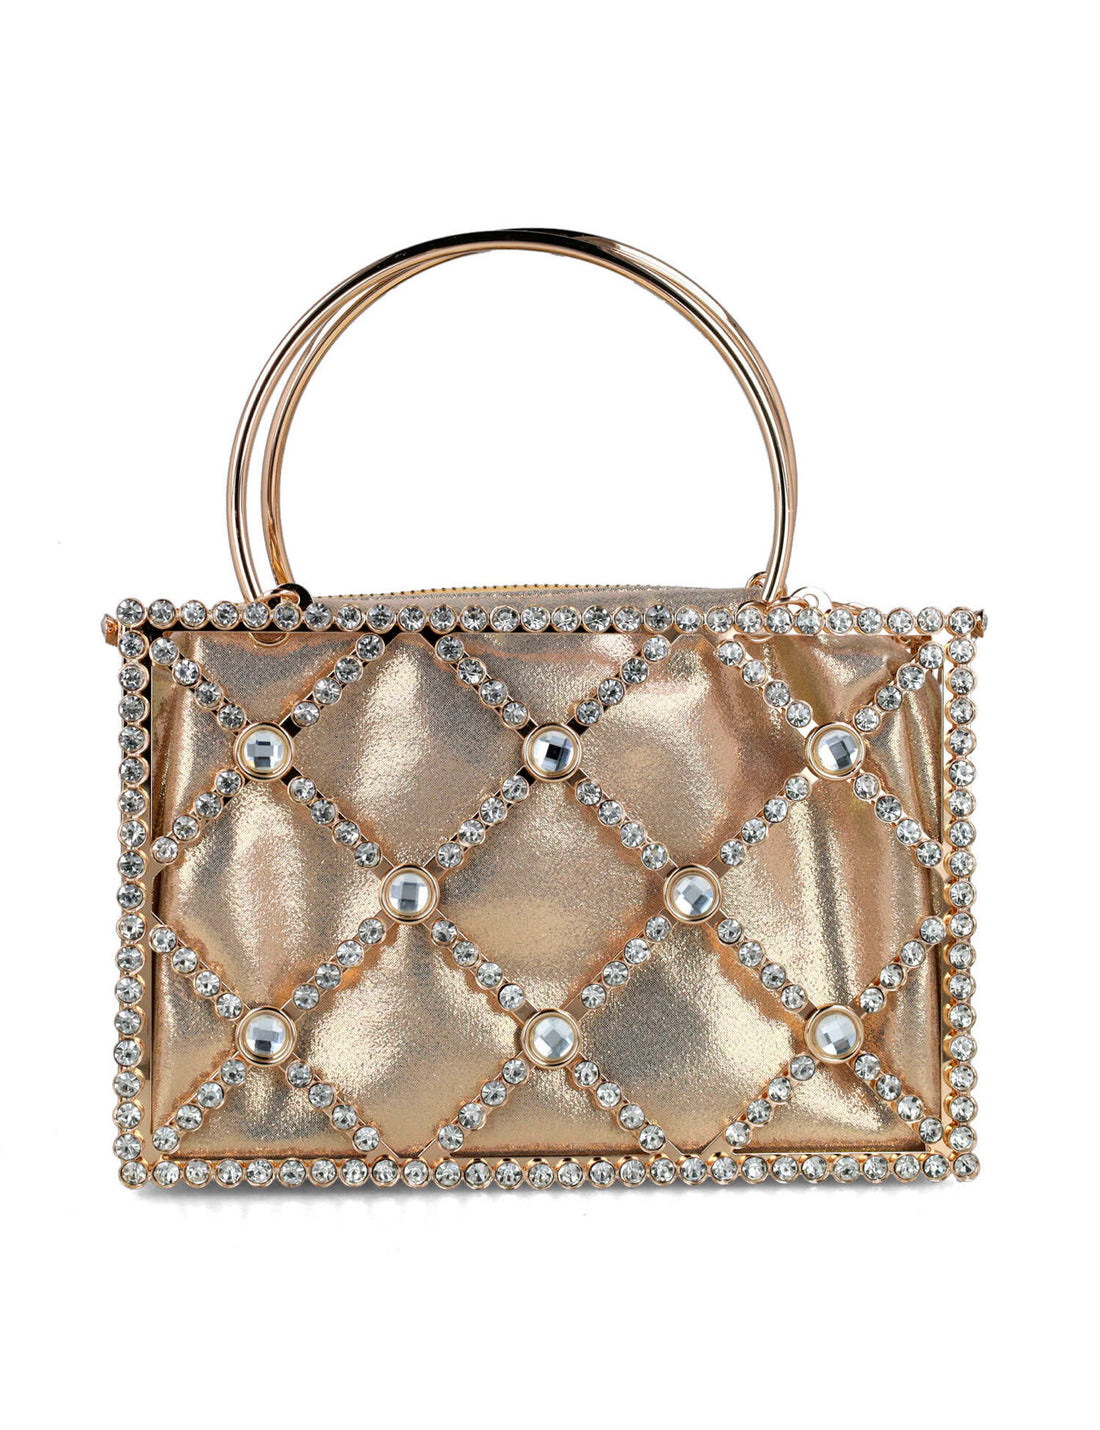 Embellished Square Handbag With Round Straps_85720_00_01